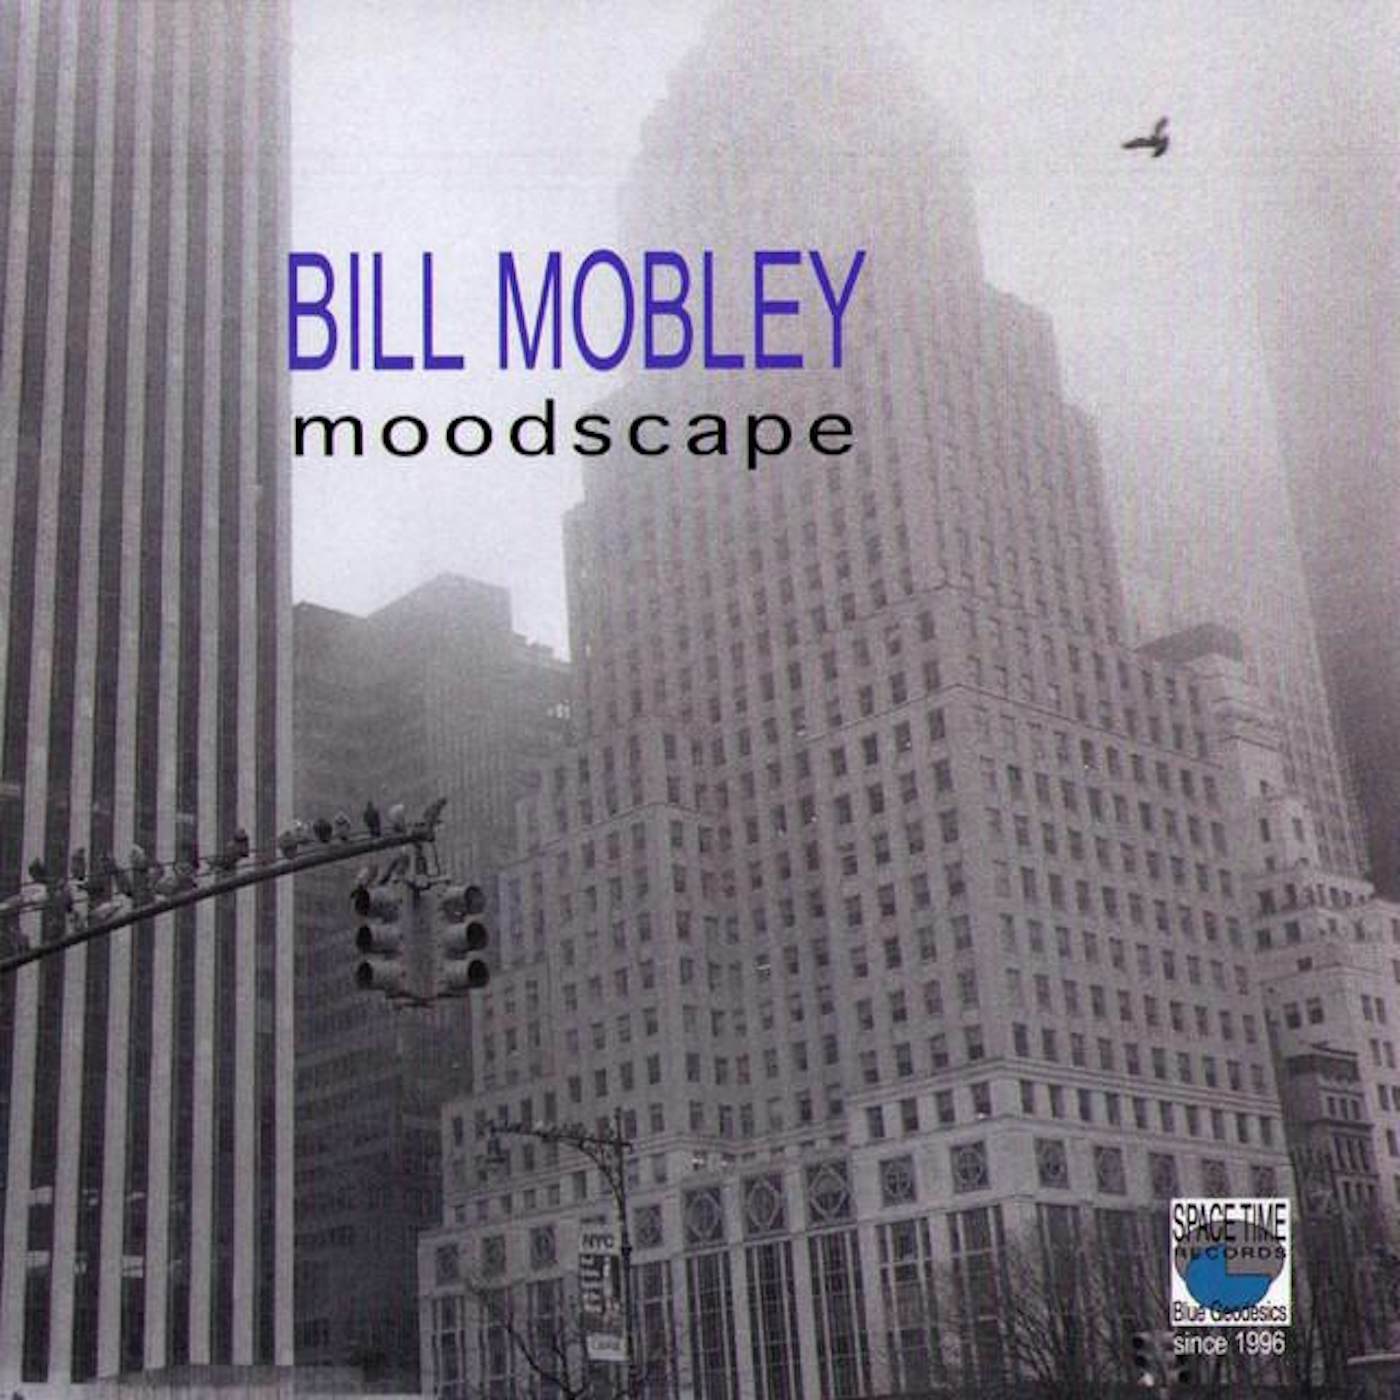 Bill Mobley